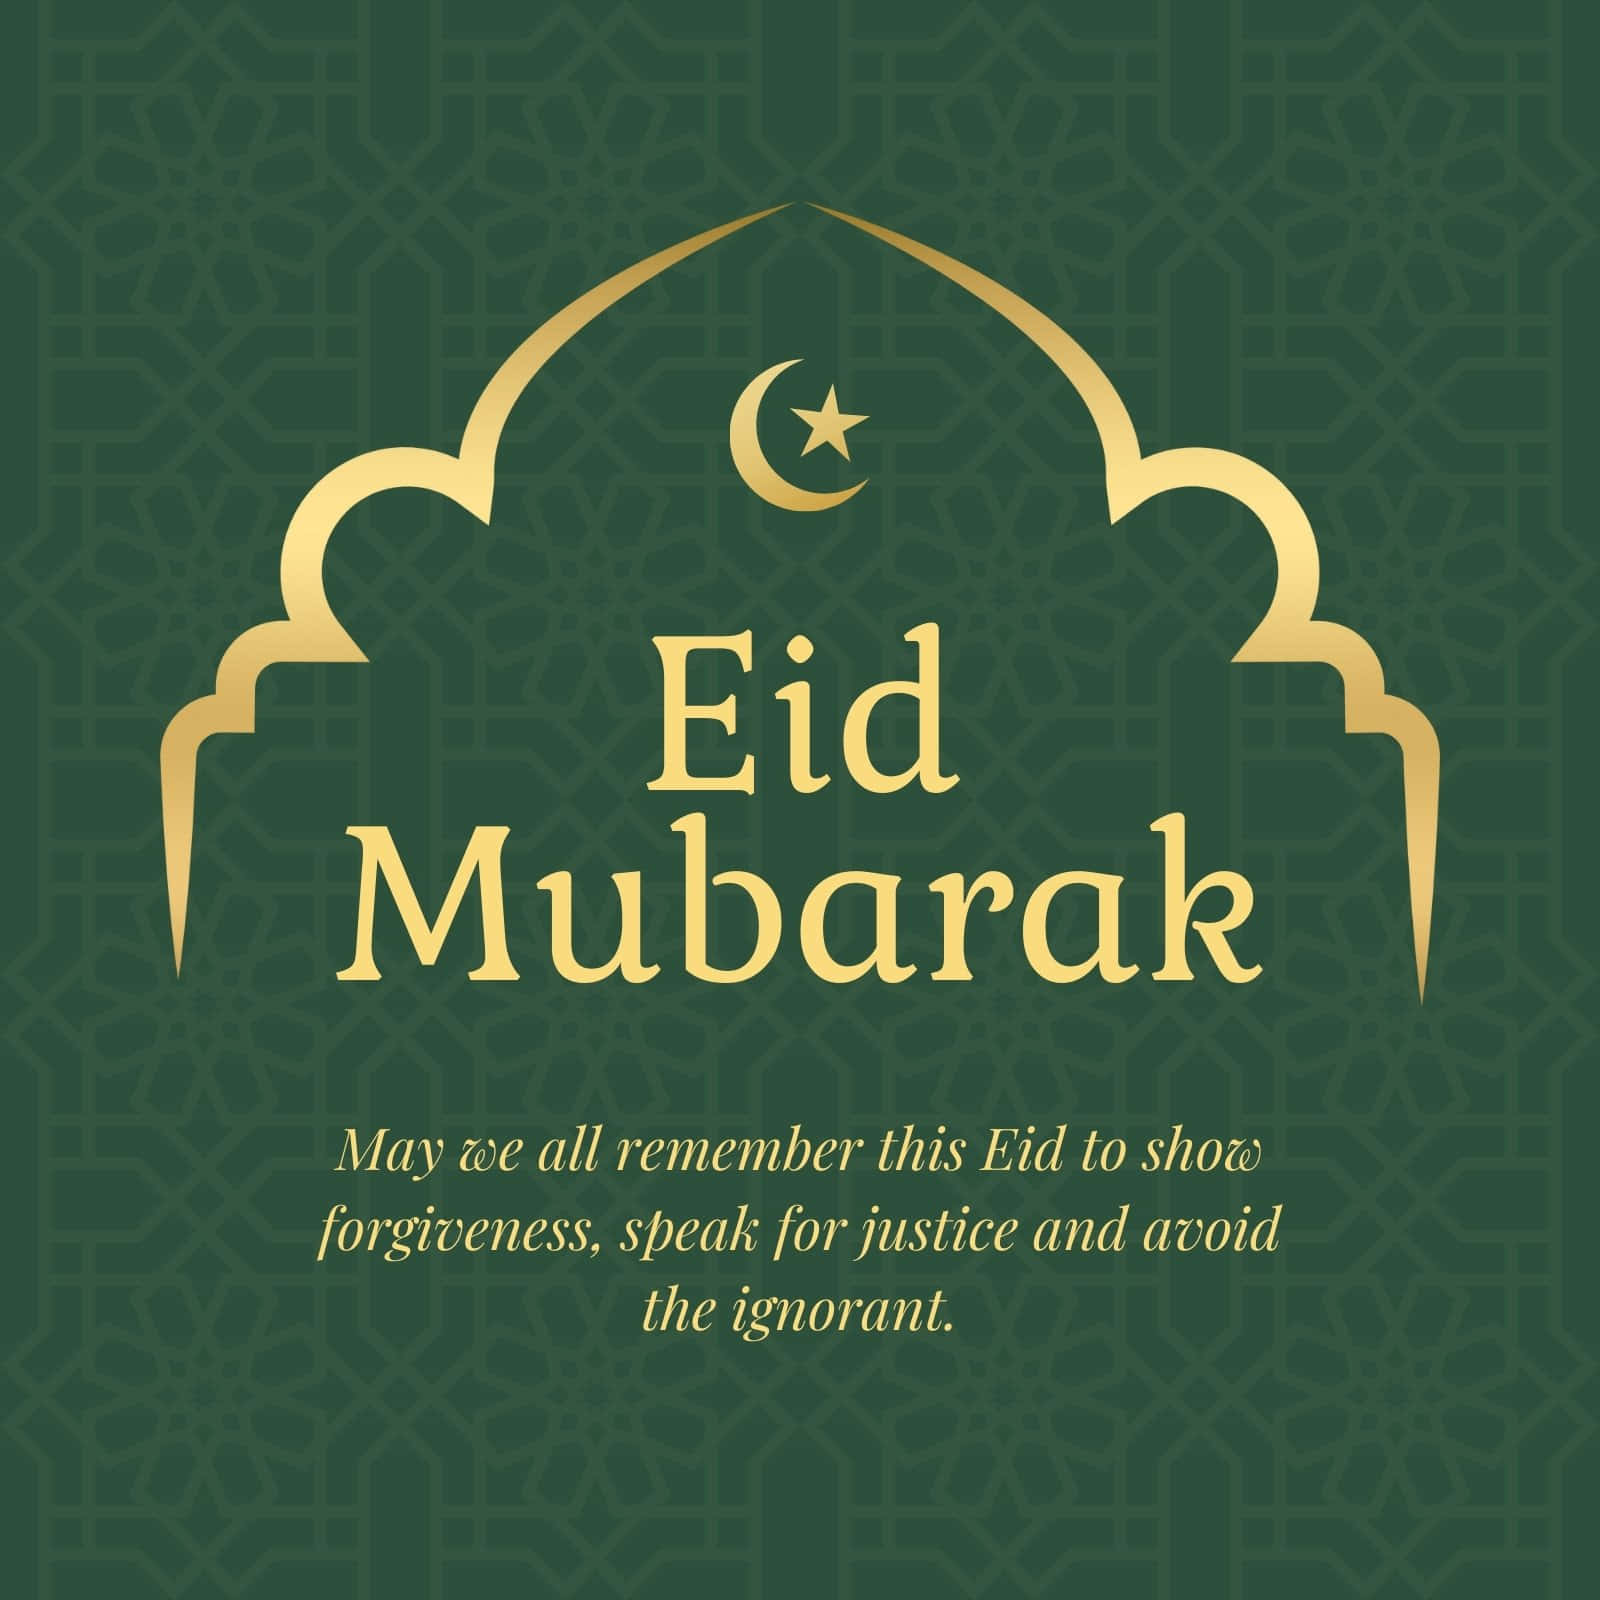 Celebrating Eid Mubarak